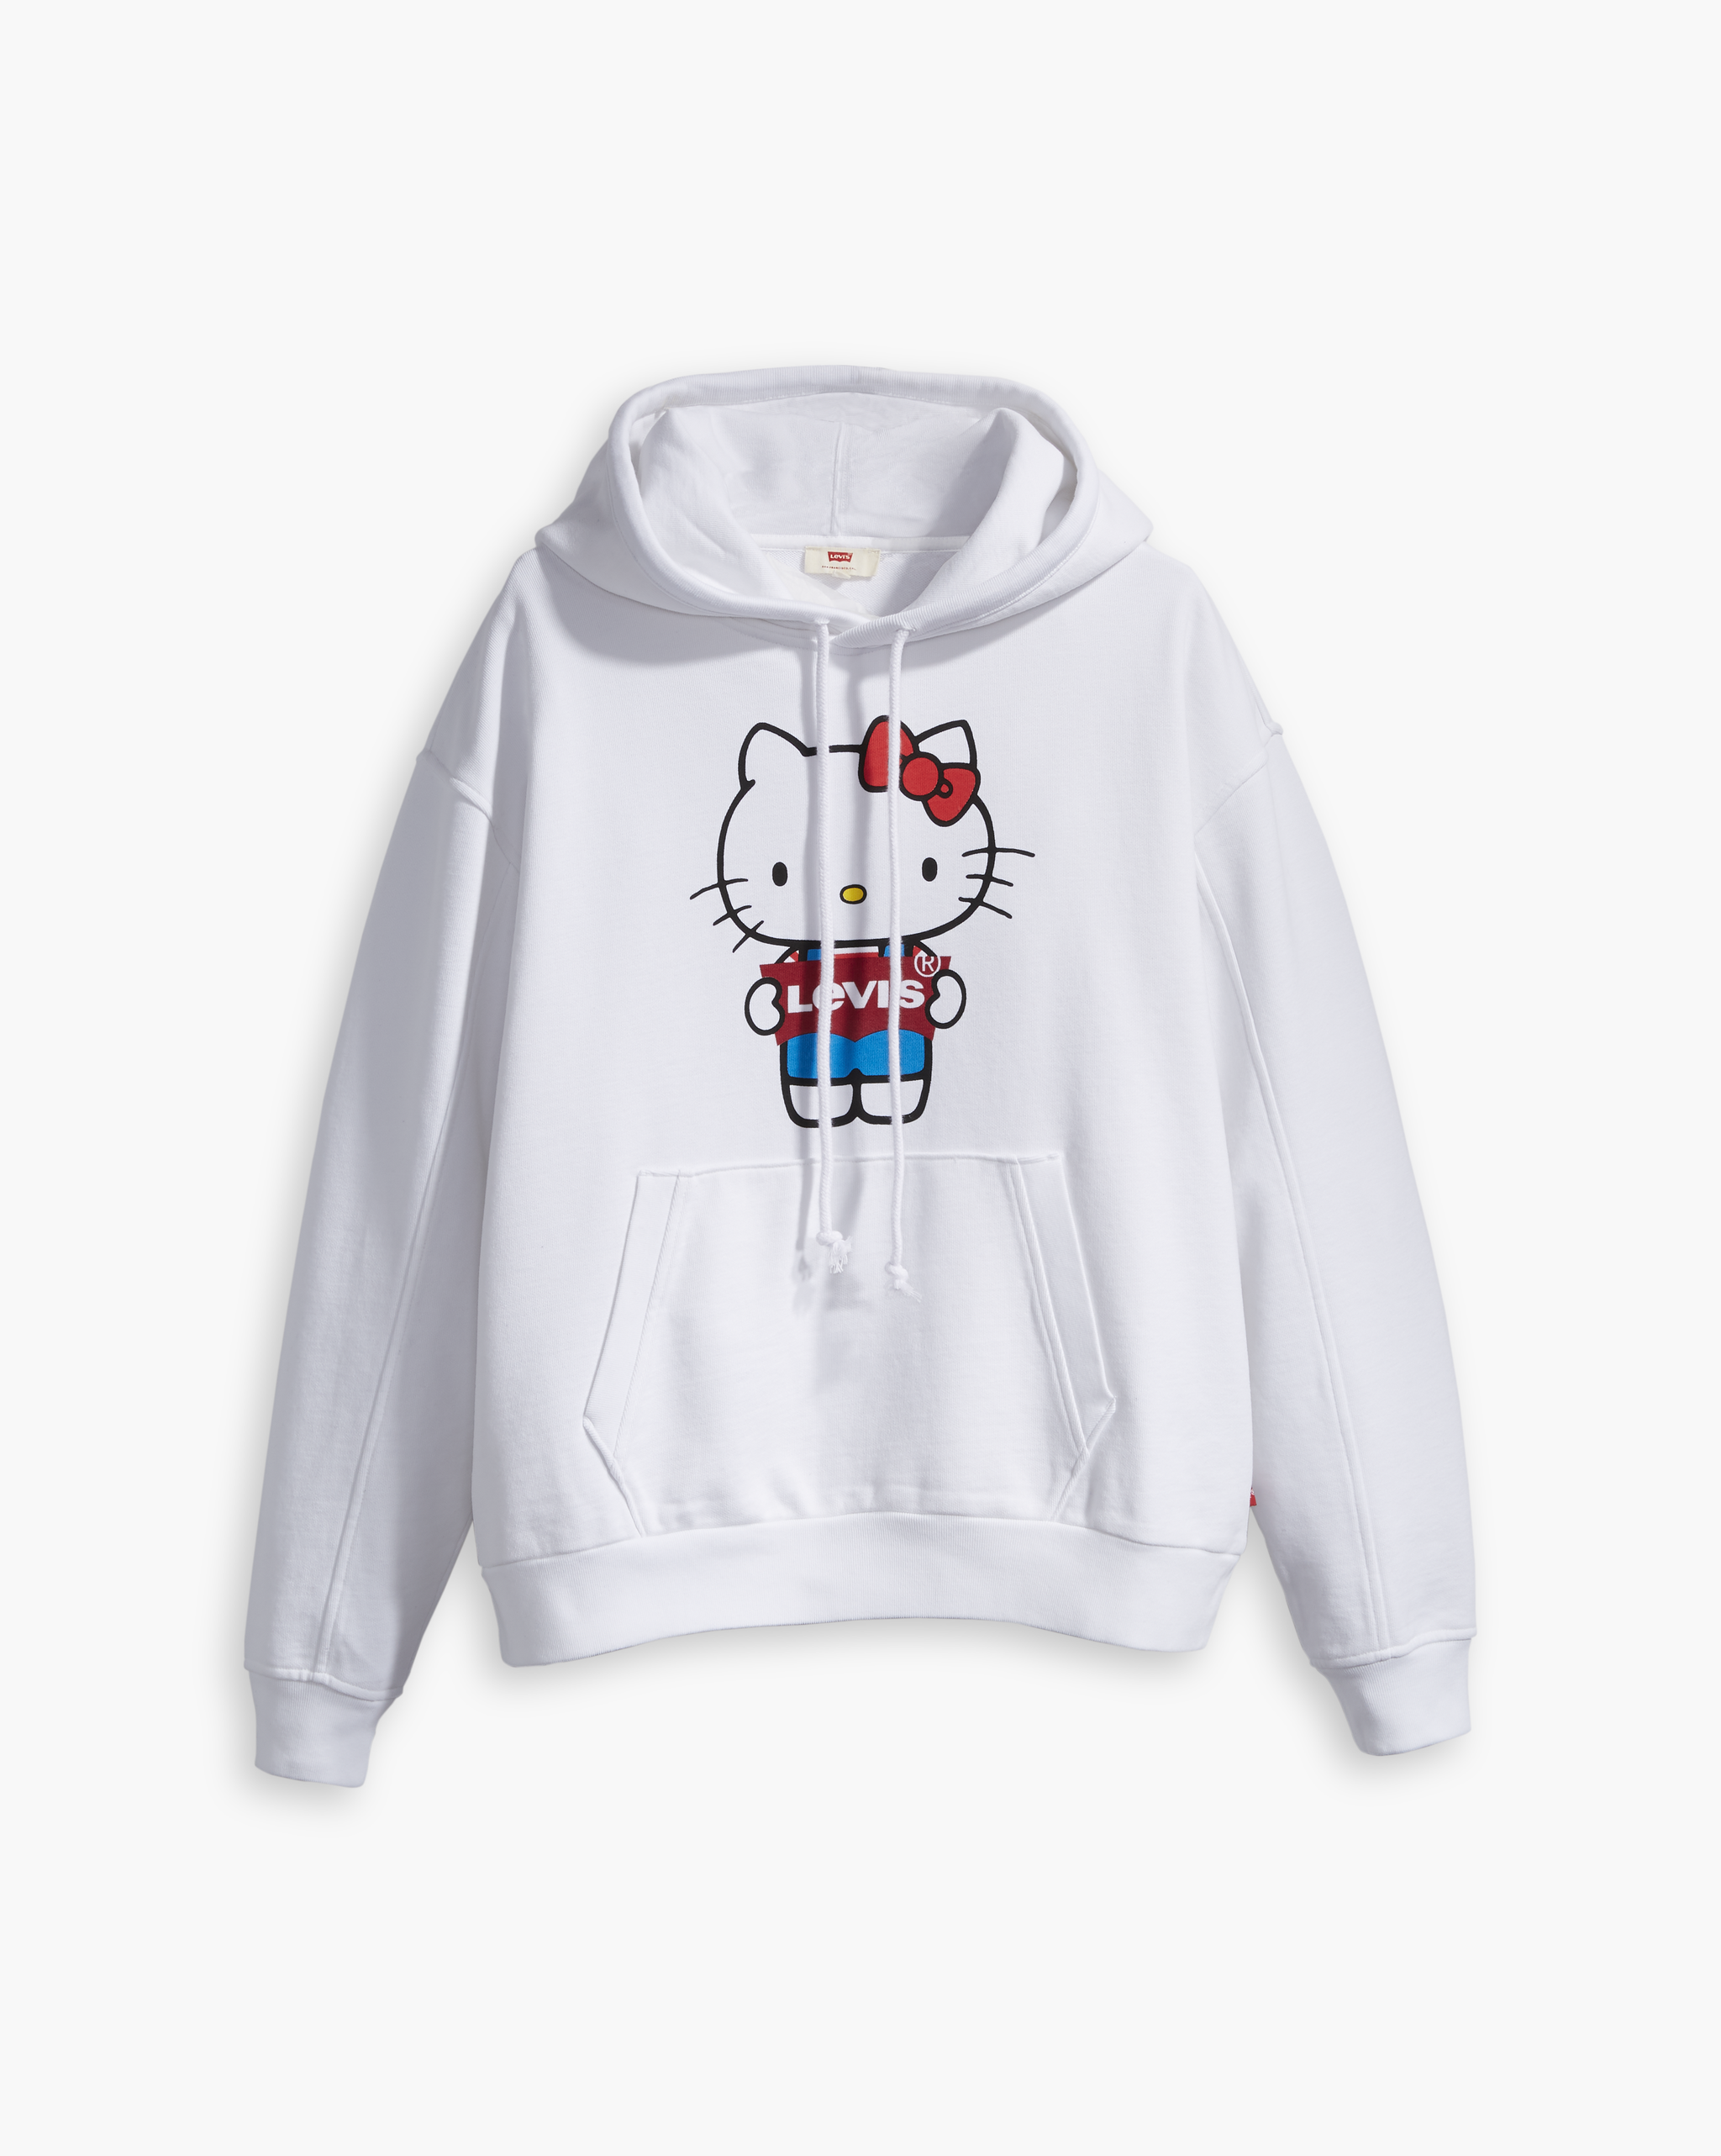 Levi's Hello Kitty Clothing Collection 2019 | POPSUGAR Fashion